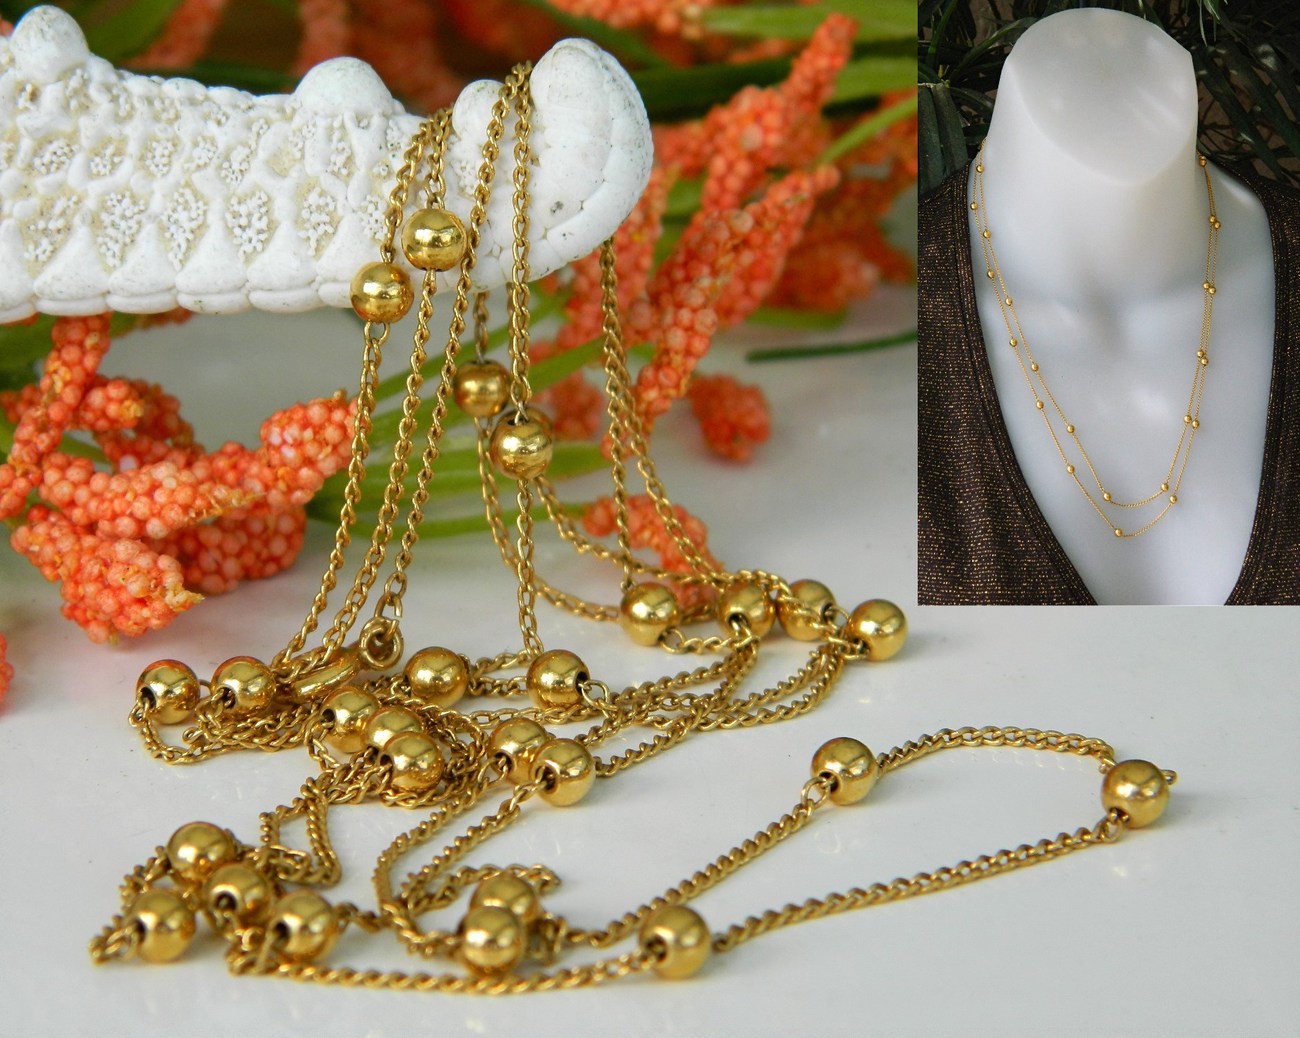 Vintage Trifari Long Chain Necklace Gold Tone Bead Accents - Necklaces ...